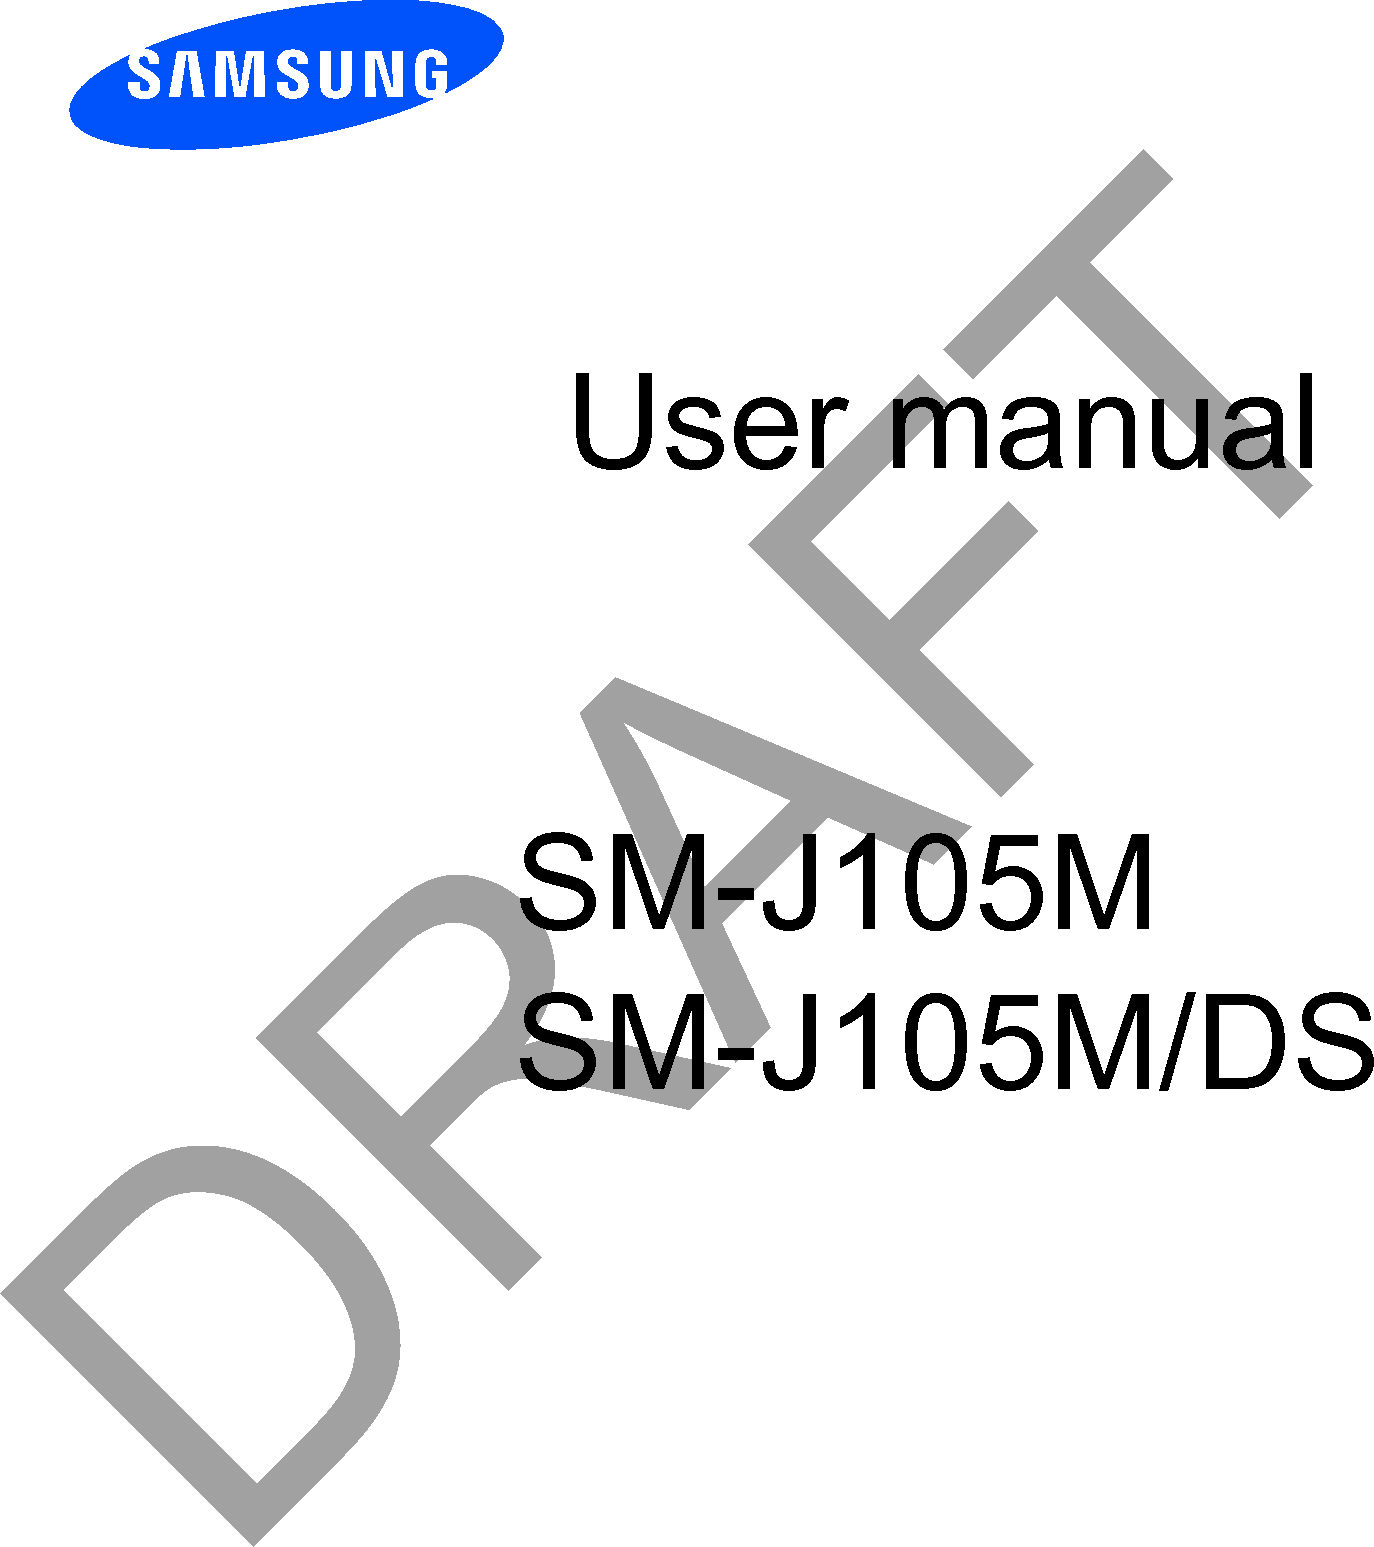 User manualSM-J105MSM-J105M/DSDRAFT